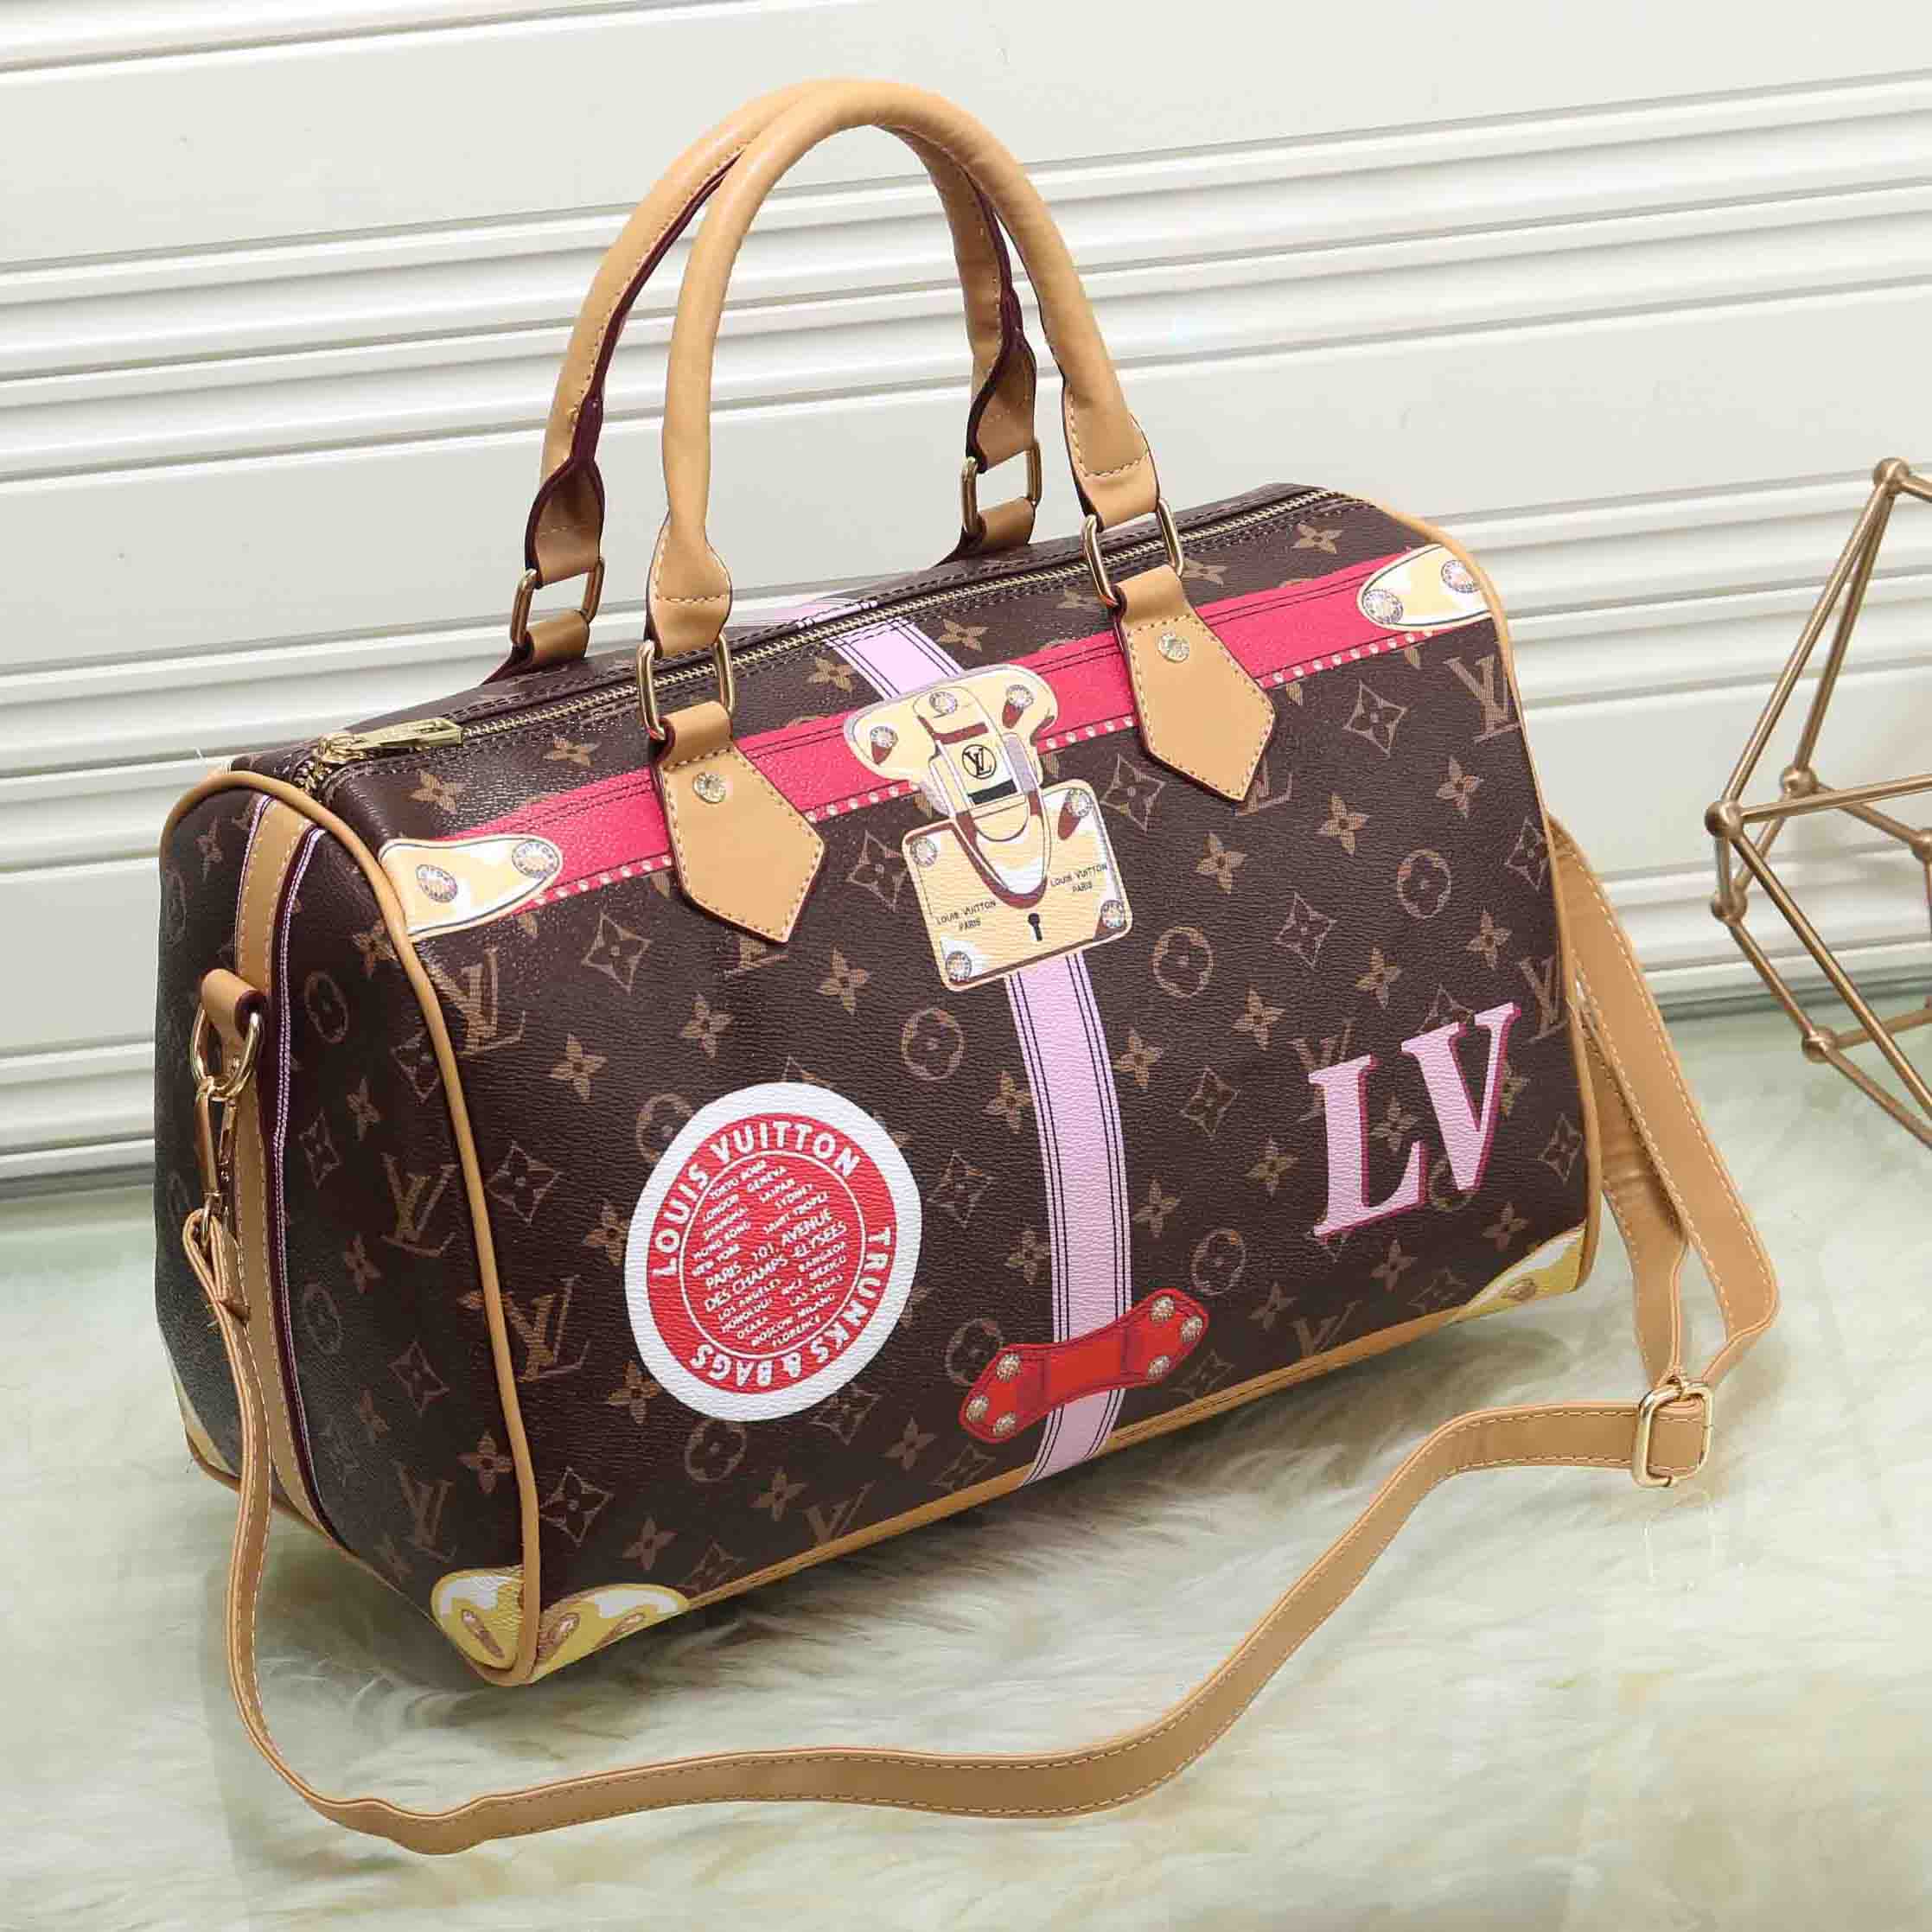 LV Louis Vuitton Fashion Leather Handbag Satchel Tote